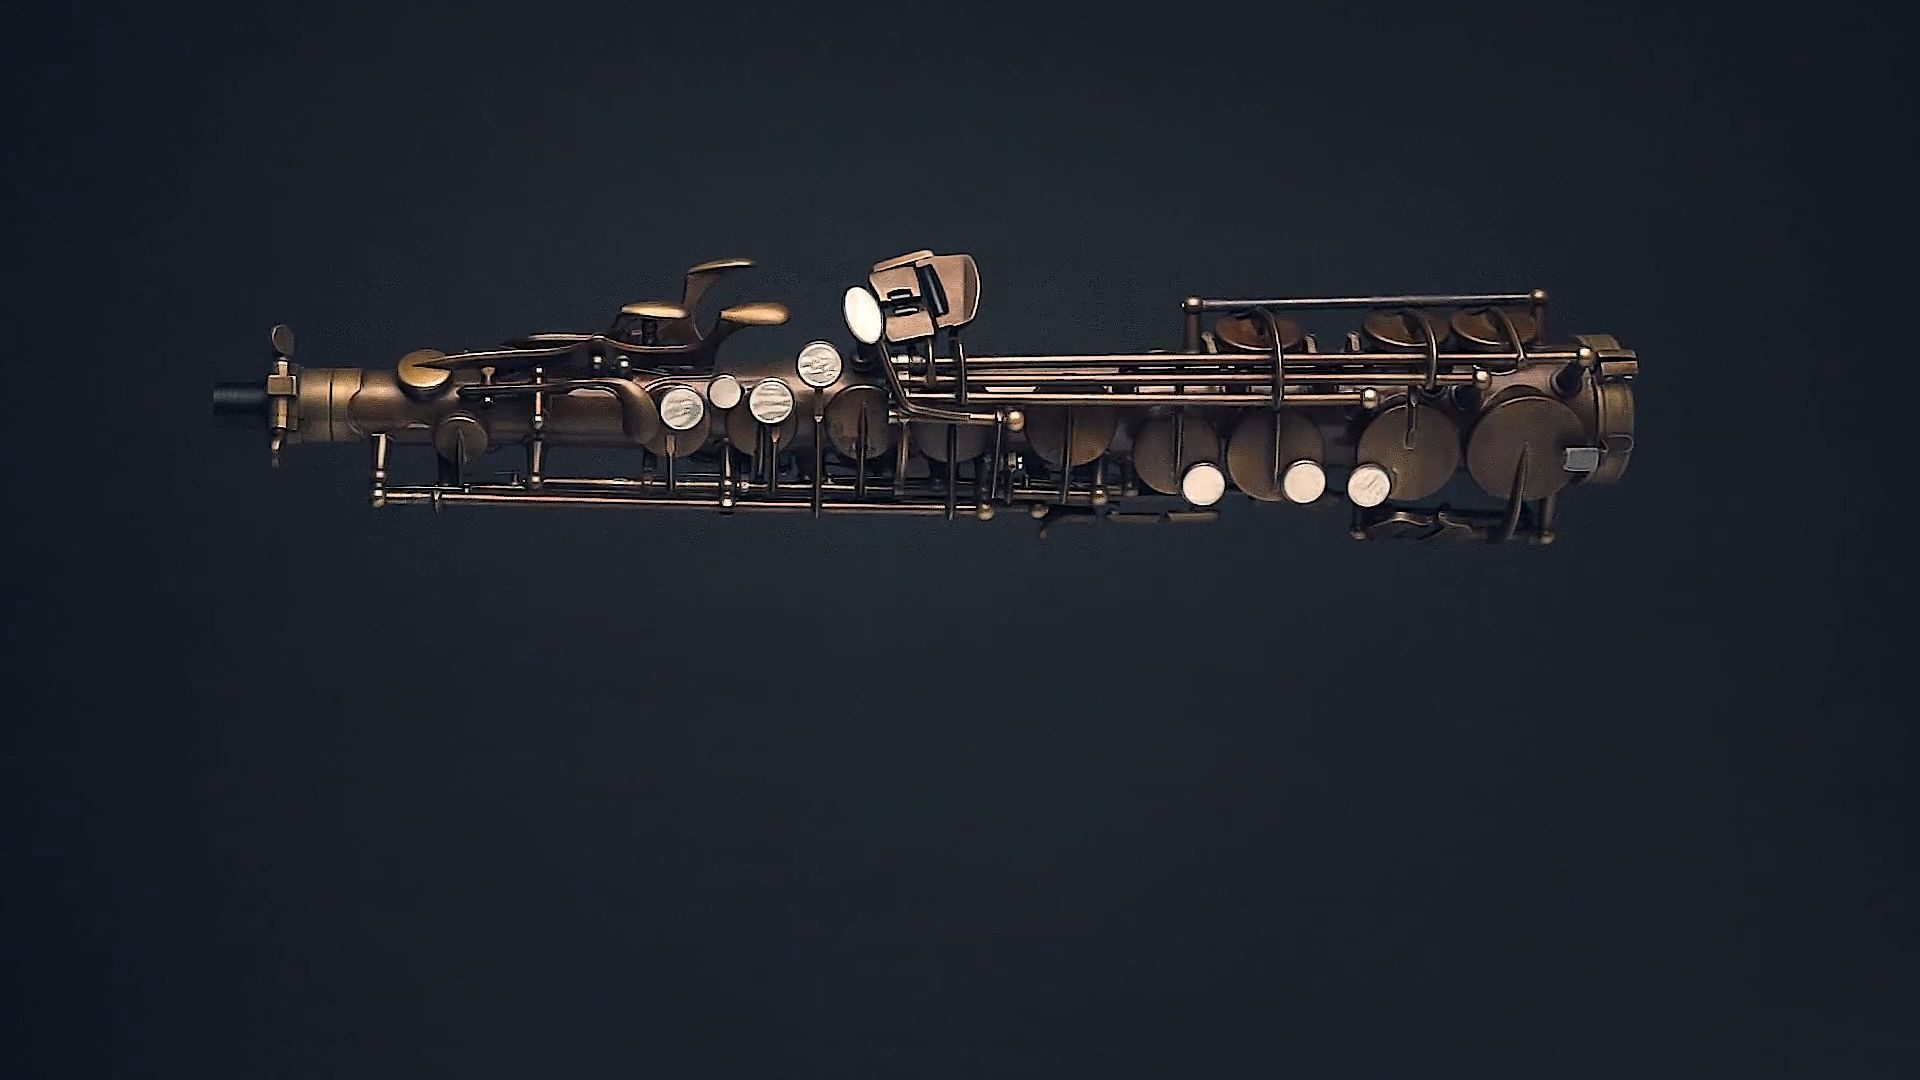 Saxophone digital EMEO - Atelier Sax Machine